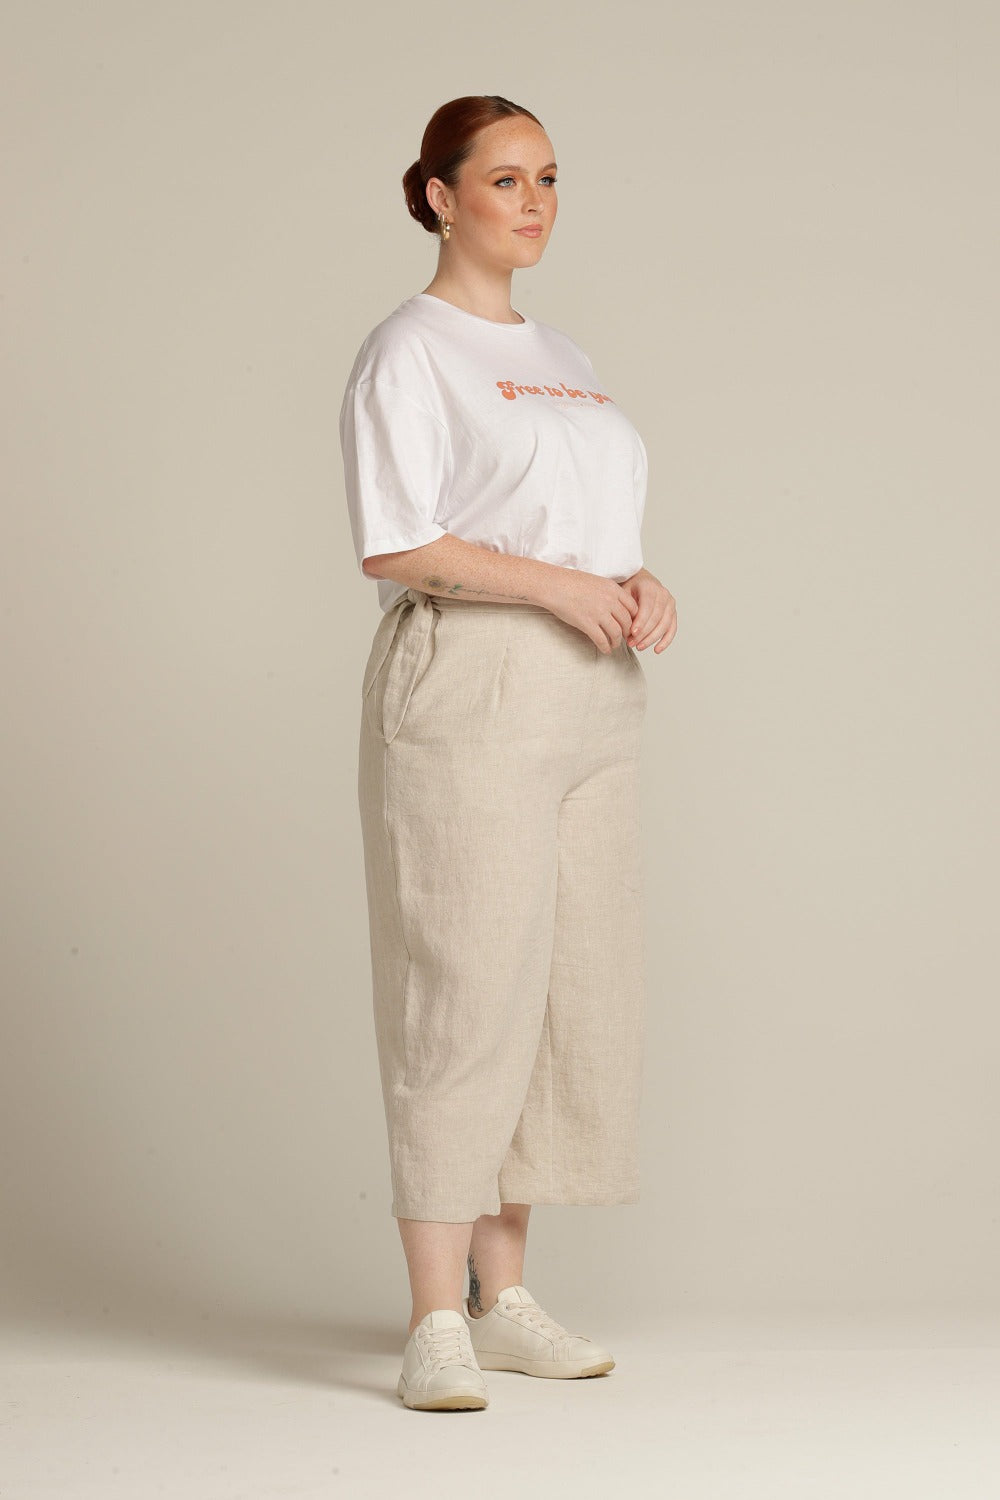 side view of a plus sized woman wearing beige linen culottes